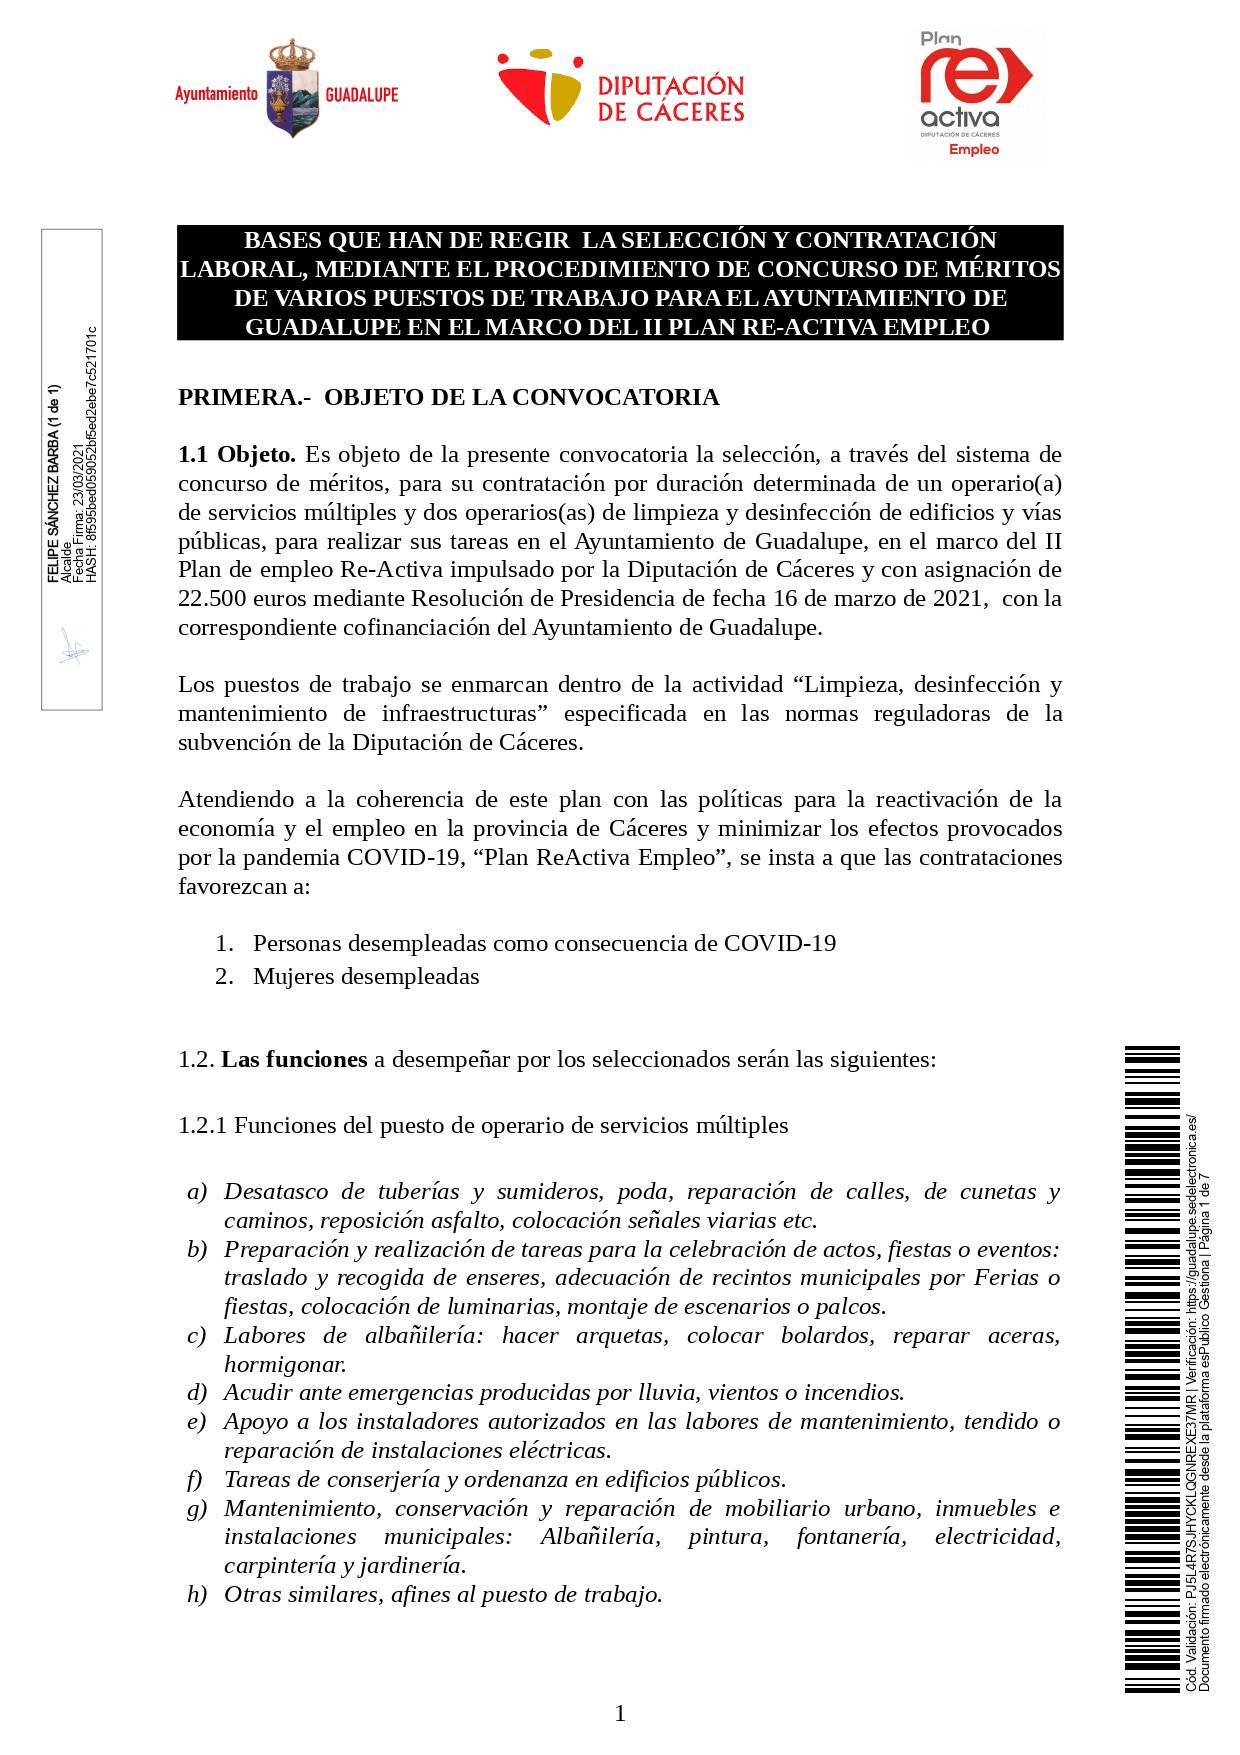 Un operario-a de servicios múltiples y dos operarios-as de limpieza (2021) - Guadalupe (Cáceres) 1